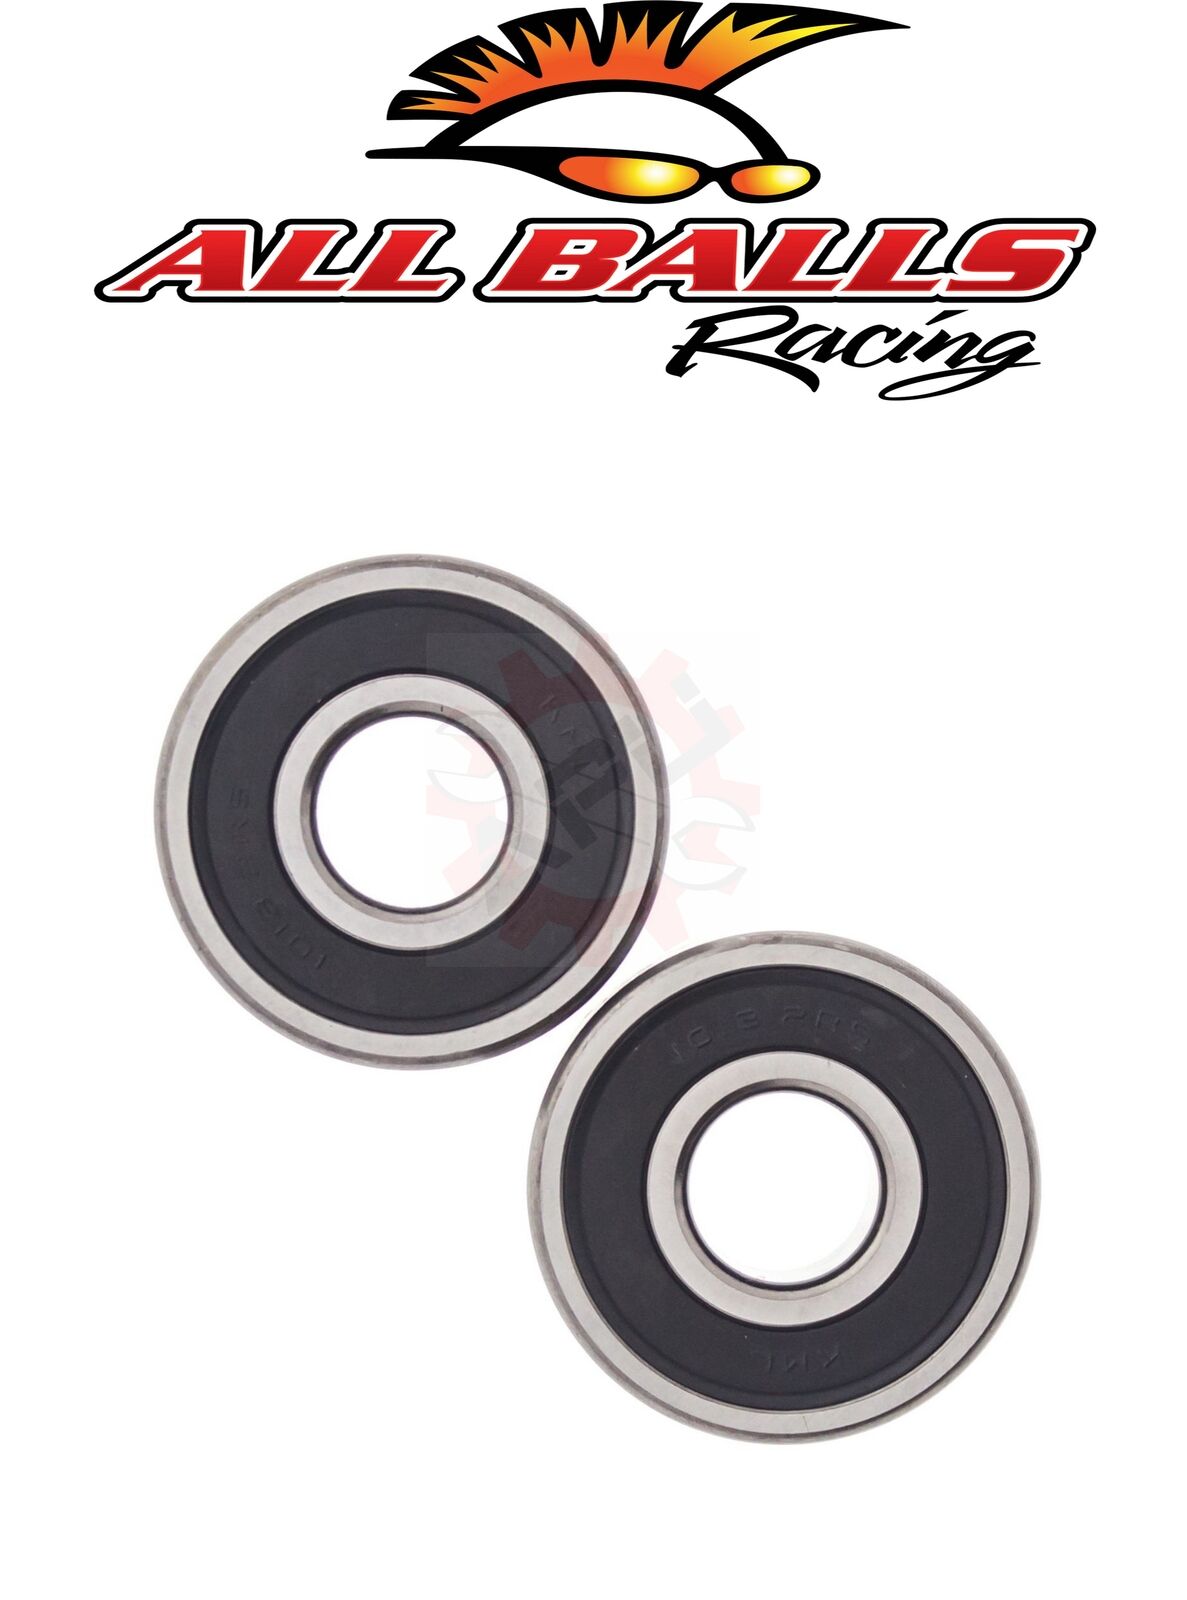 Harley Wheel Bearings HD Front or Rear (Fits 130 Models) ALL BALLS 25-1368